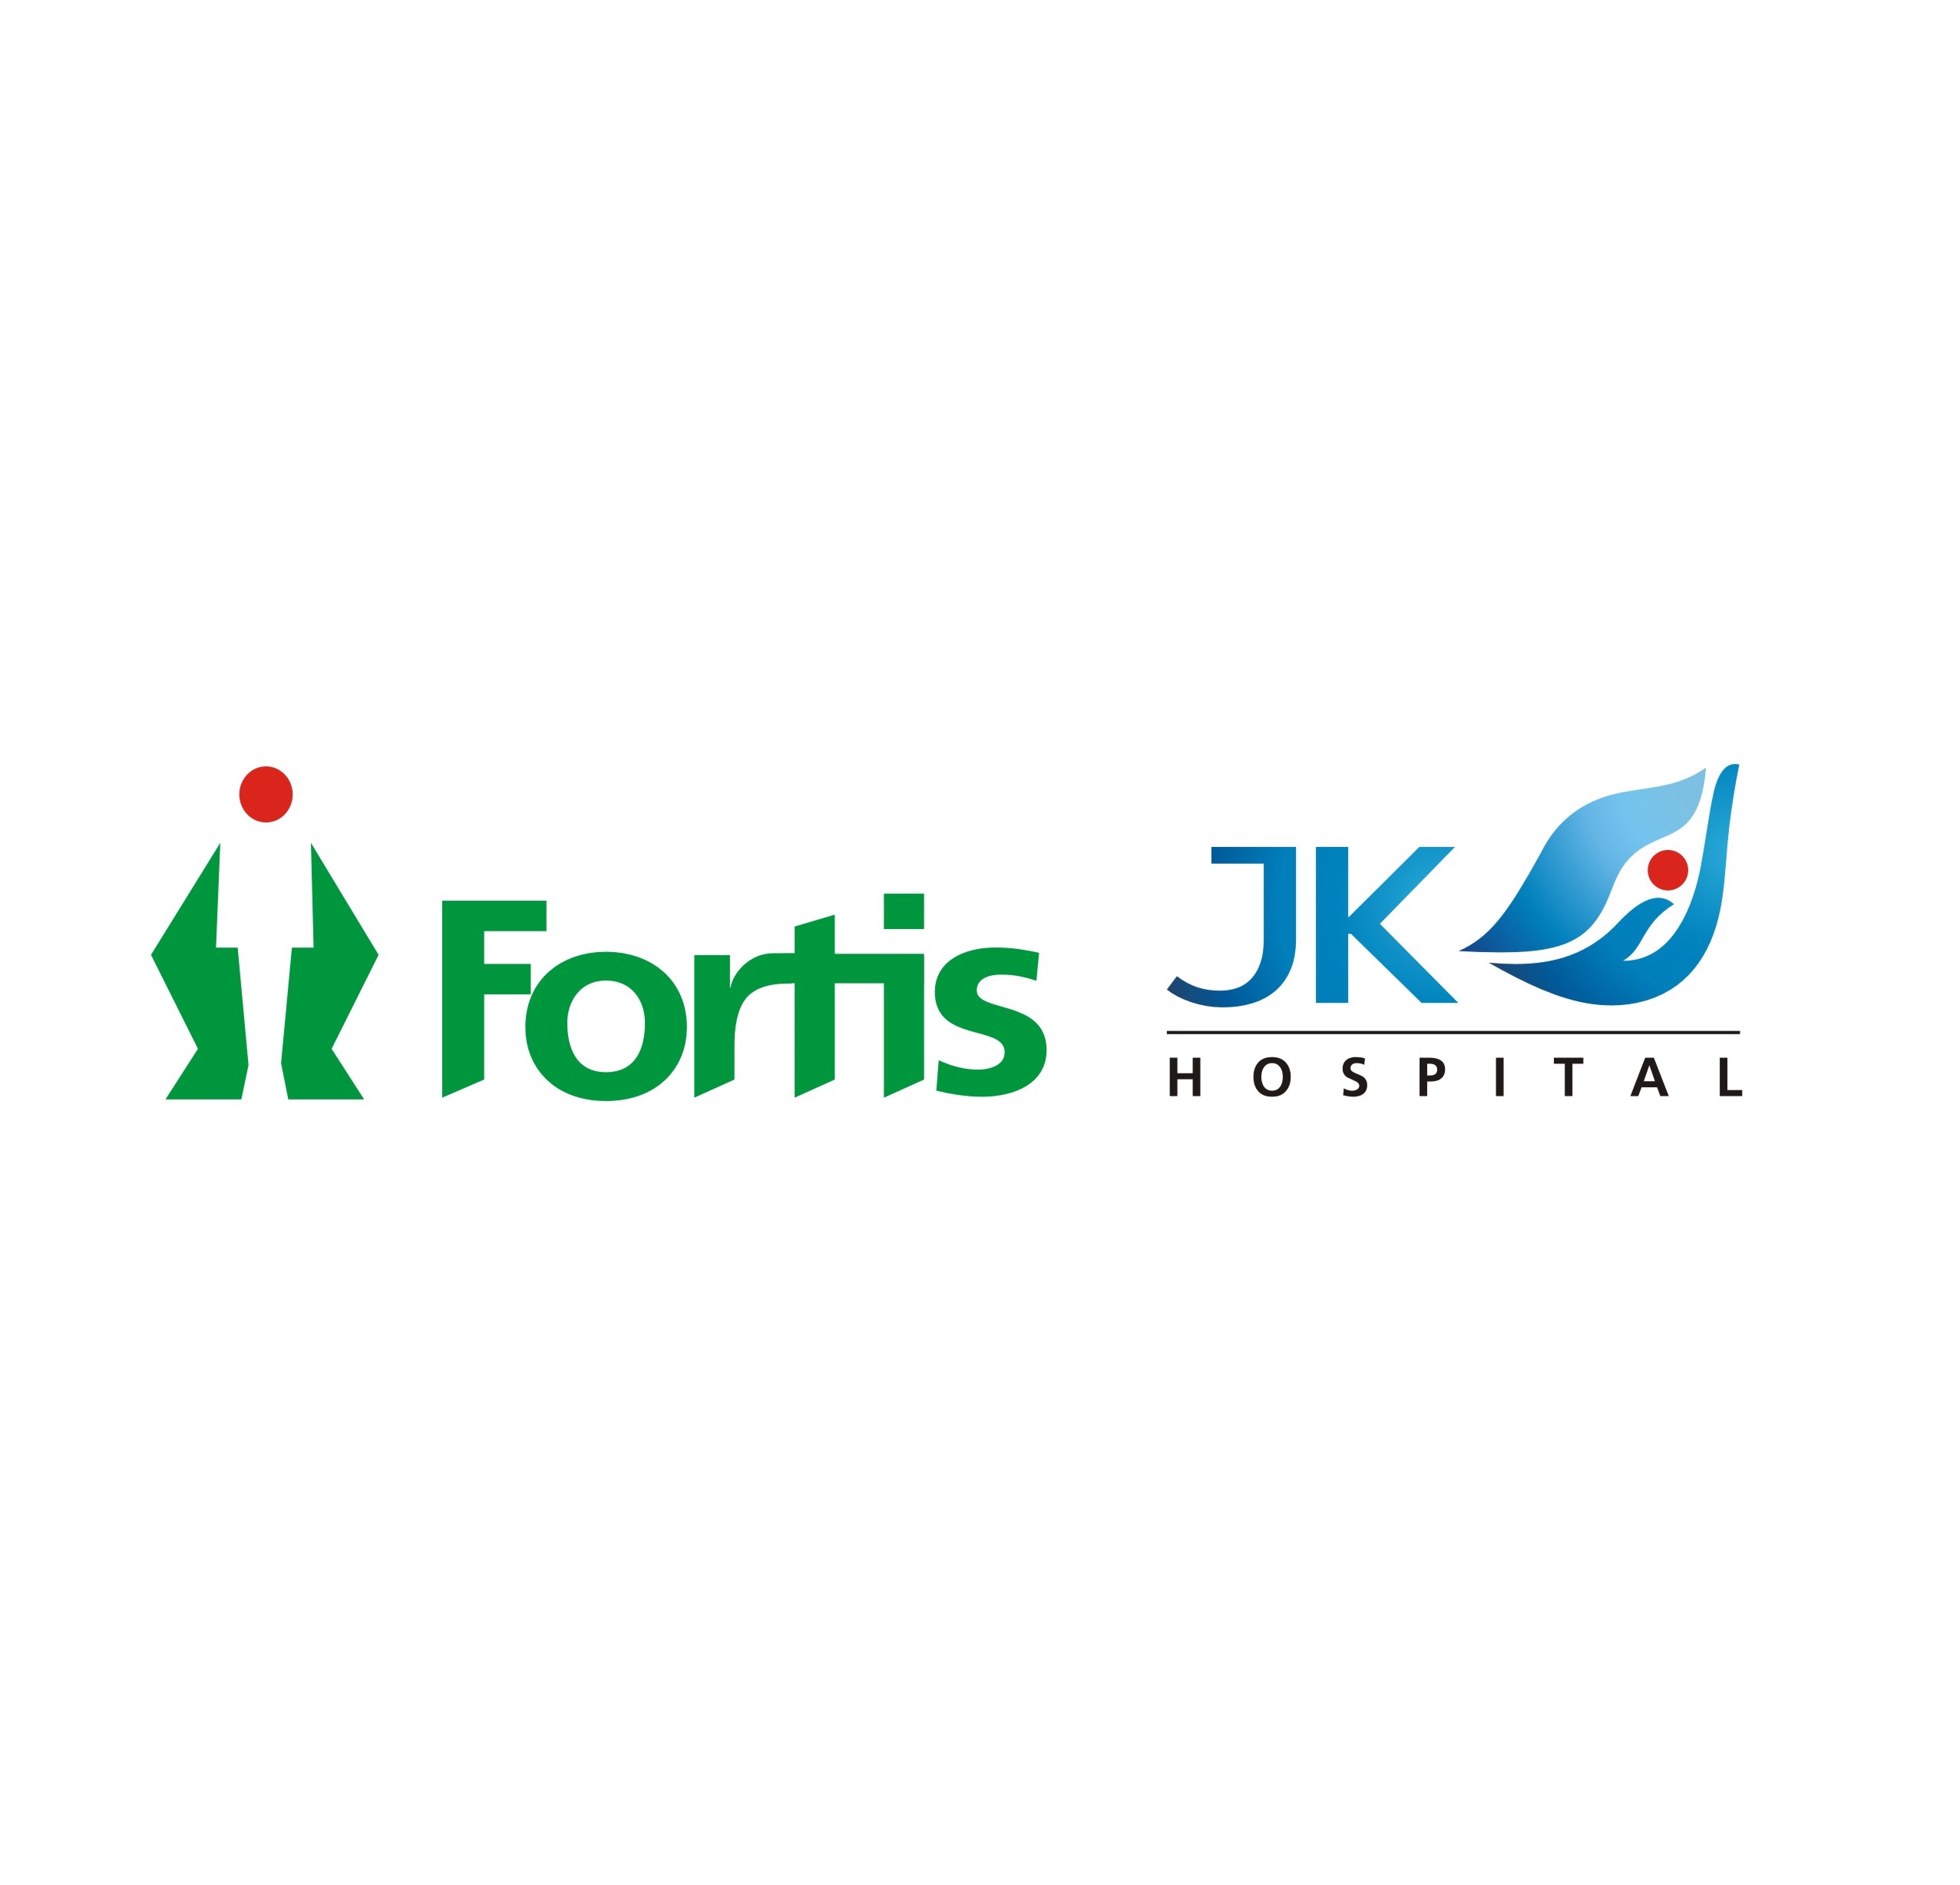 Fortis JK Hospital Logo